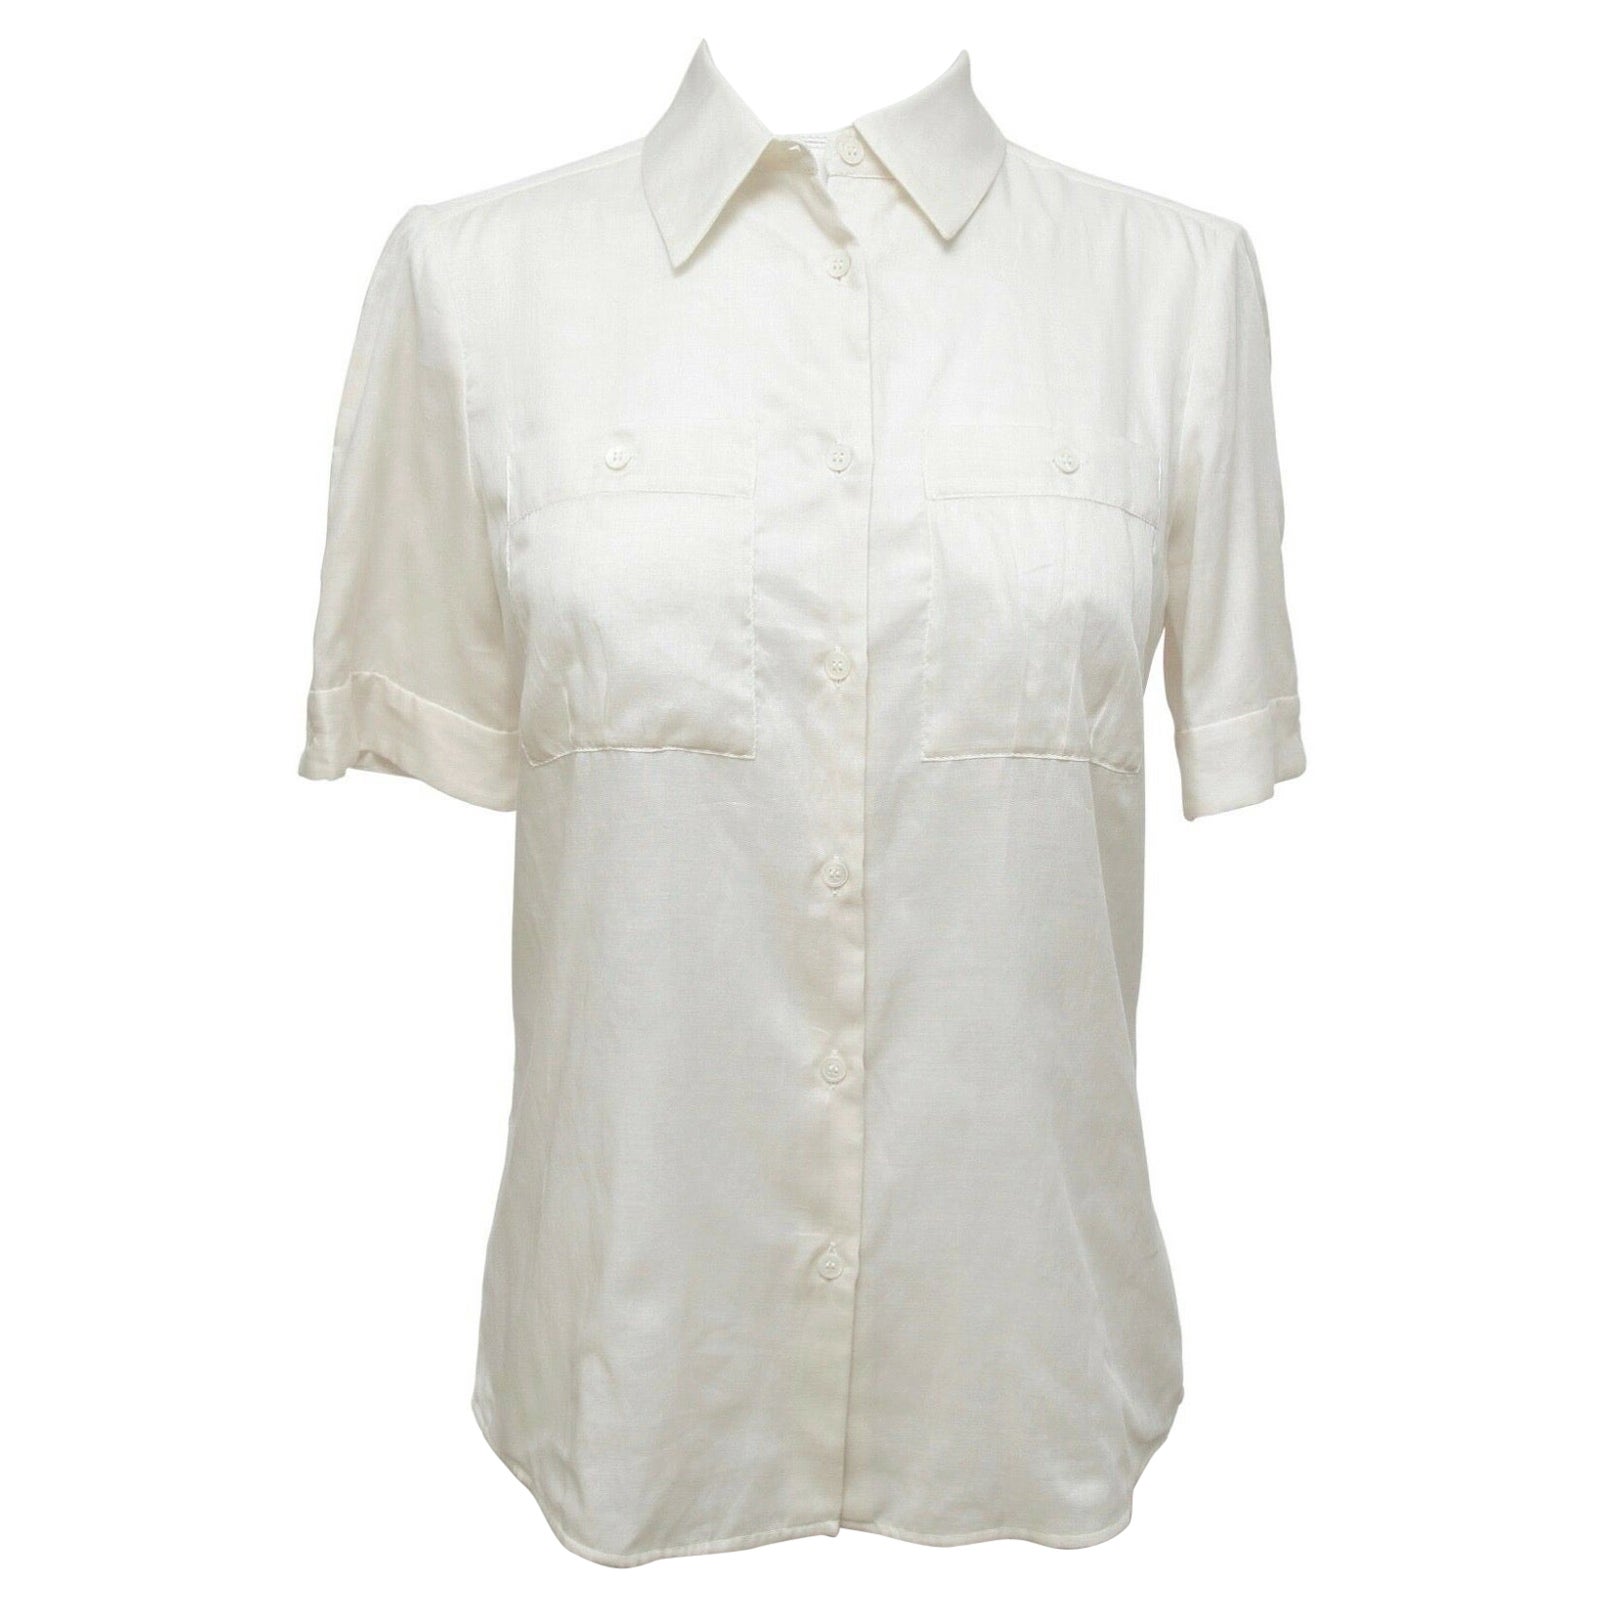 MIU MIU Blouse Shirt Top Button Down Cotton Ivory Short Sleeve Sz 42